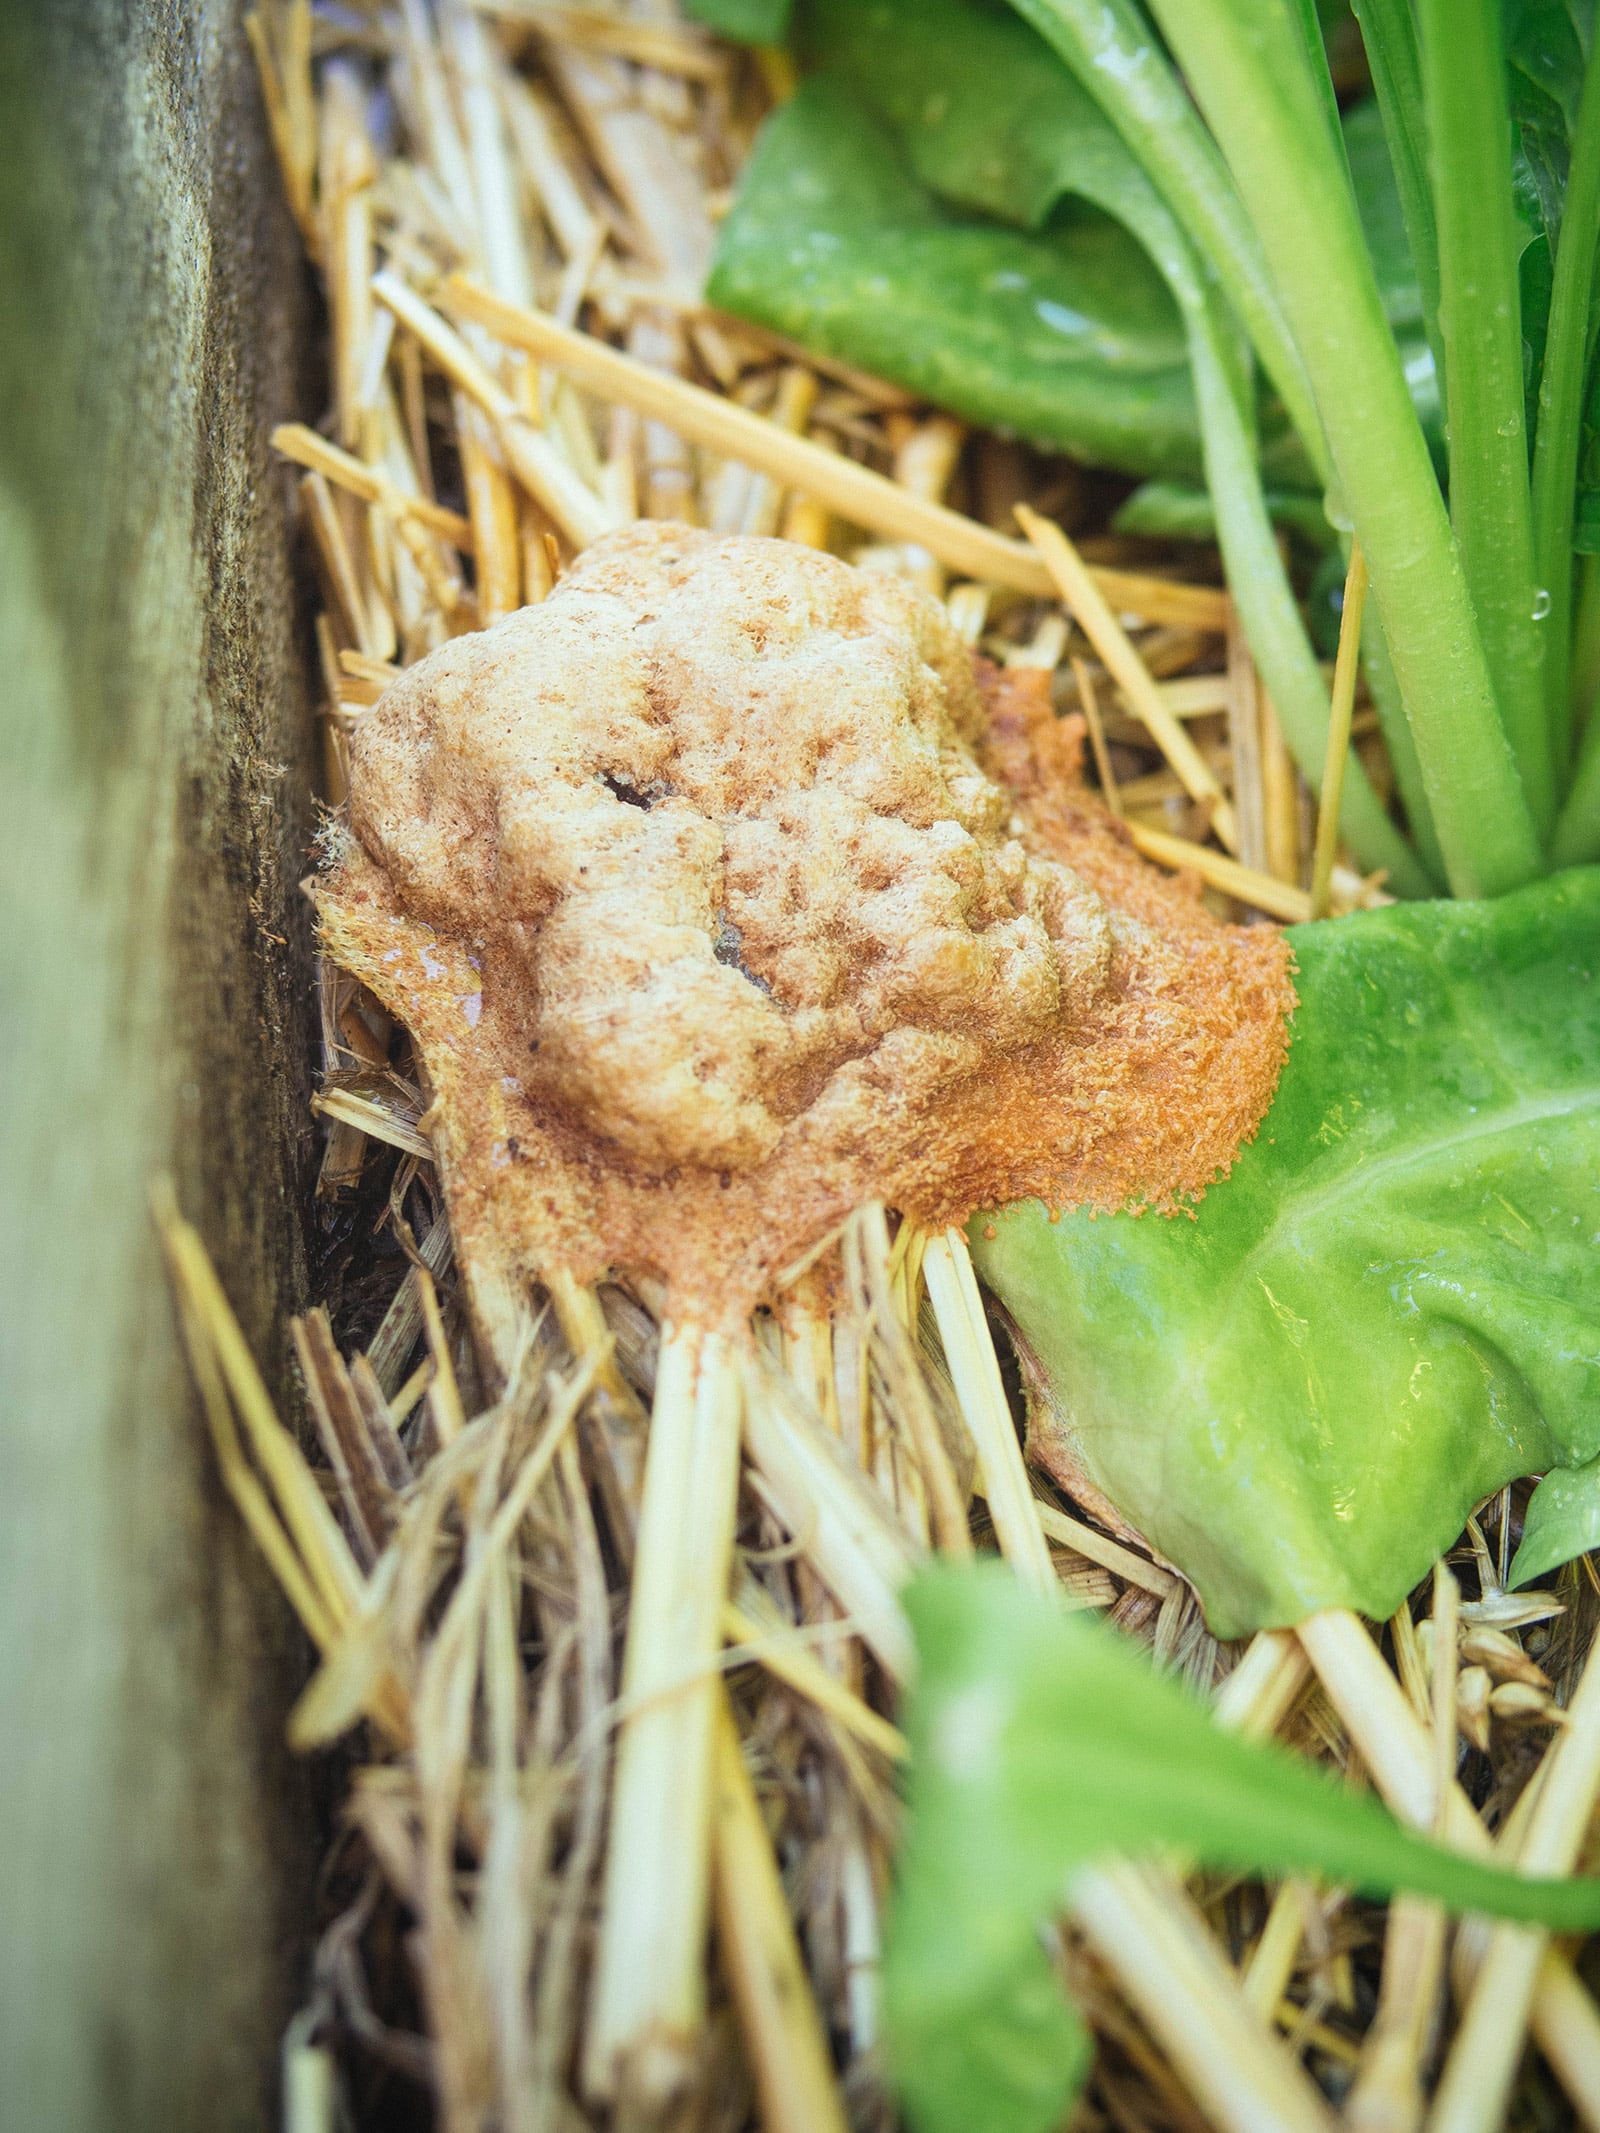 Dog vomit fungus: the weird slime mold in your garden